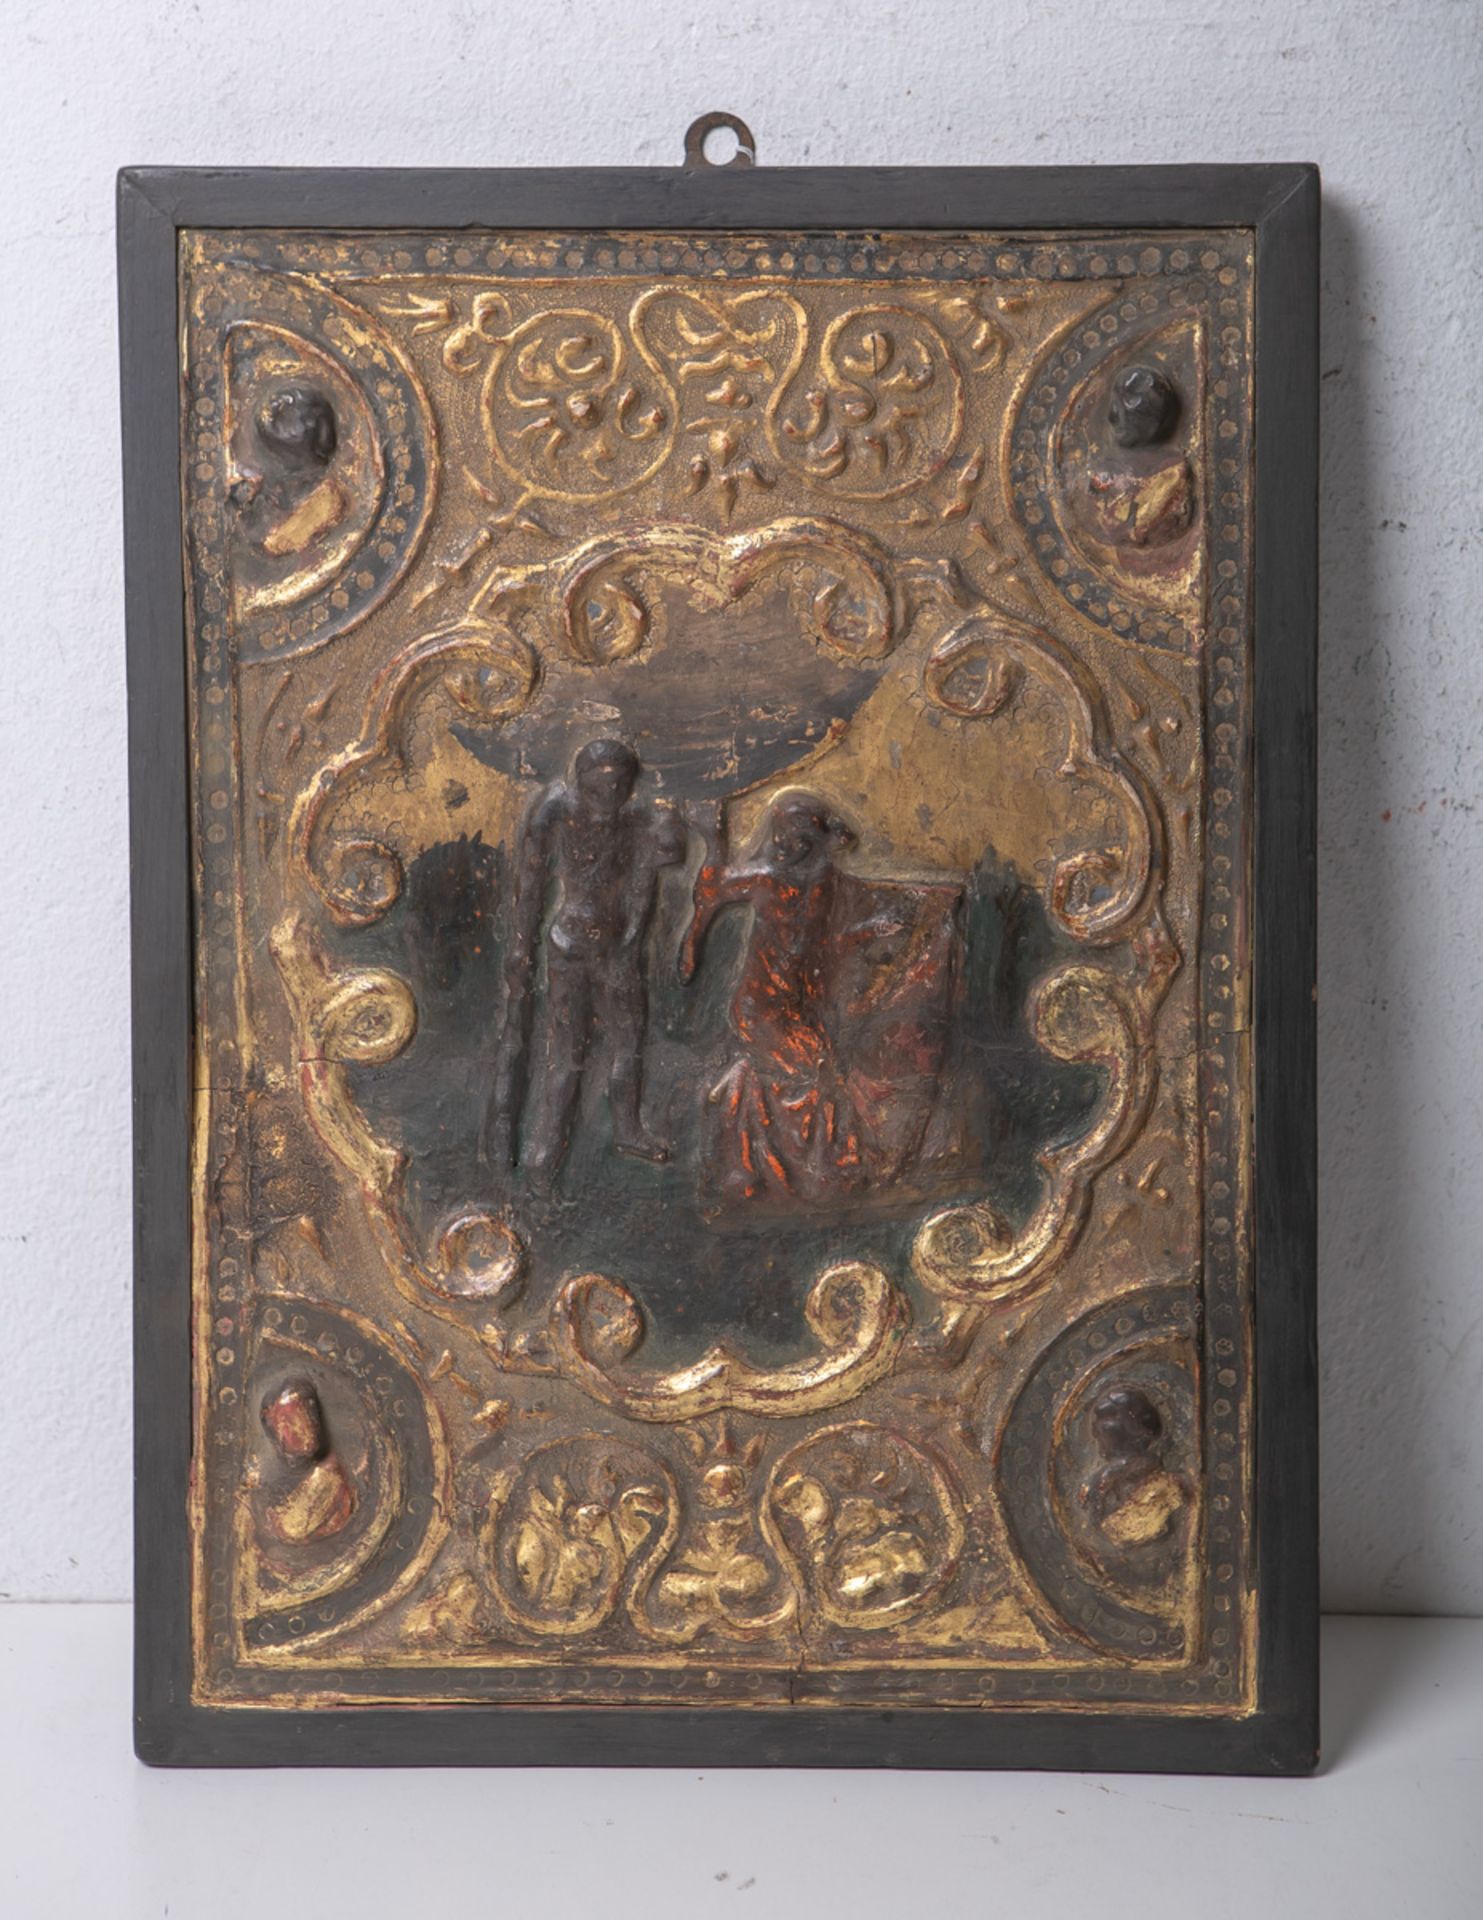 Alte Holzplatte m. einer mythologischer Szene (wohl Spanien od. Italien, 18. Jh.)